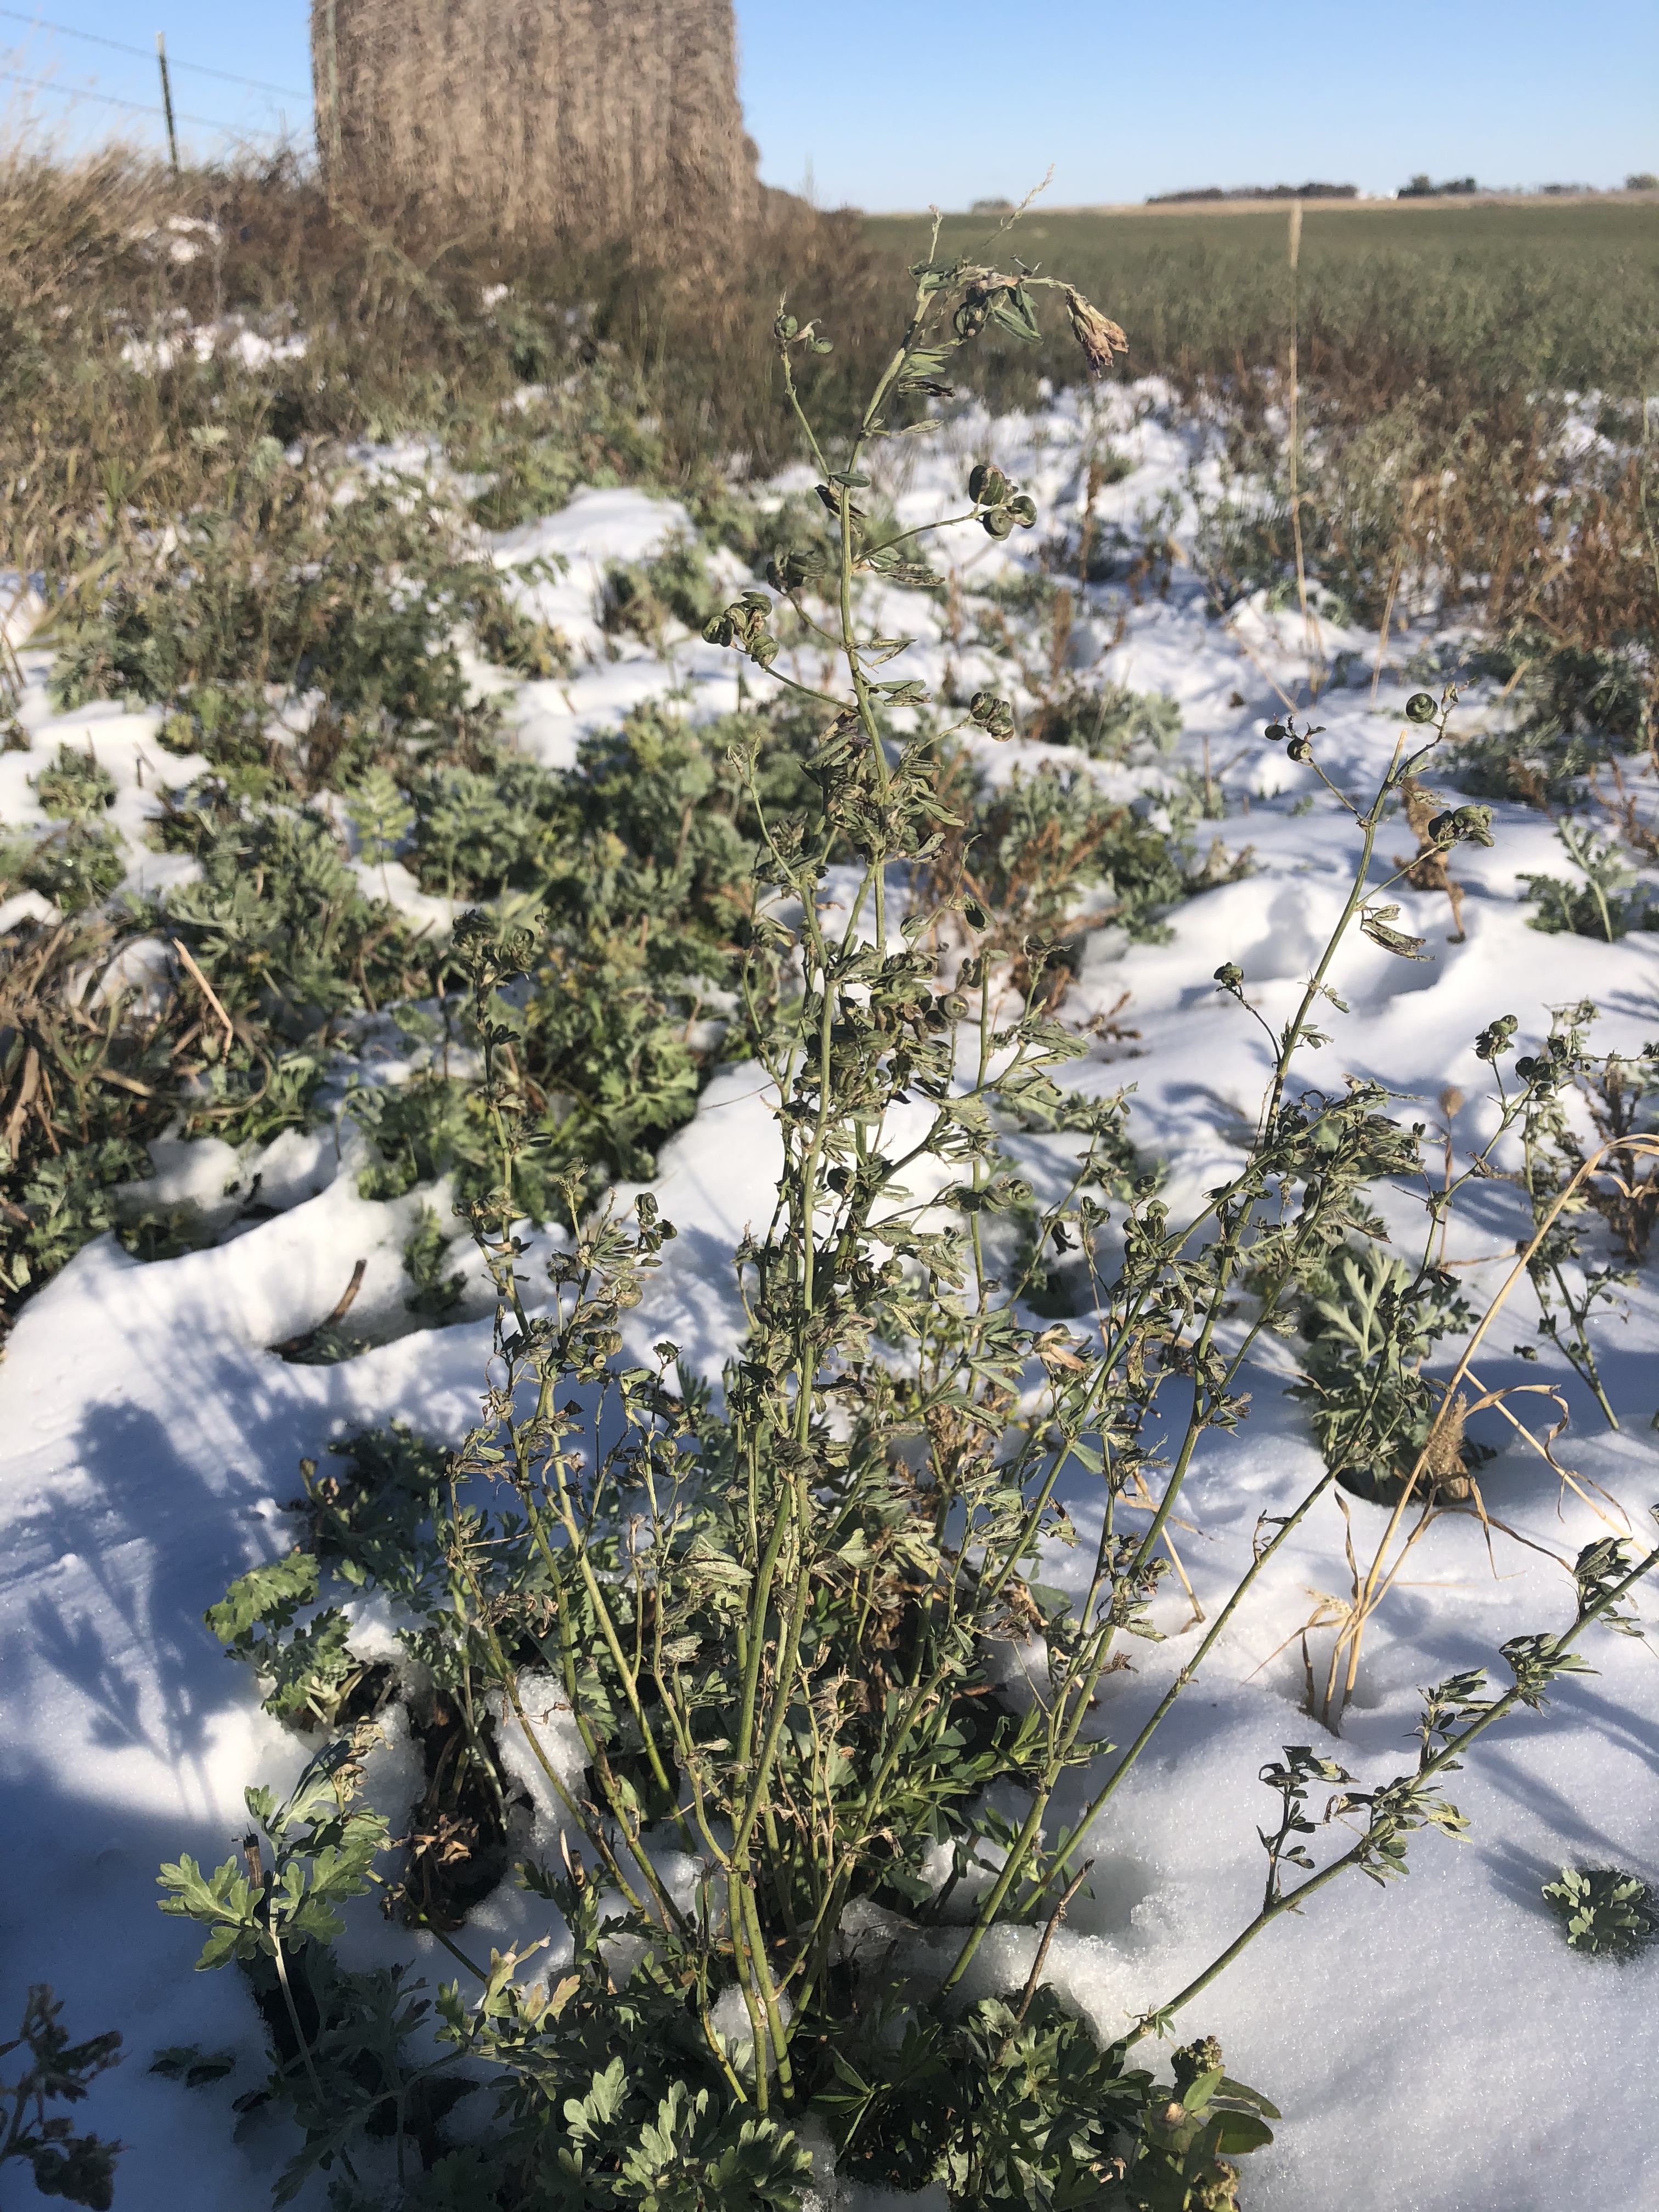 alfalfa with snow on the ground